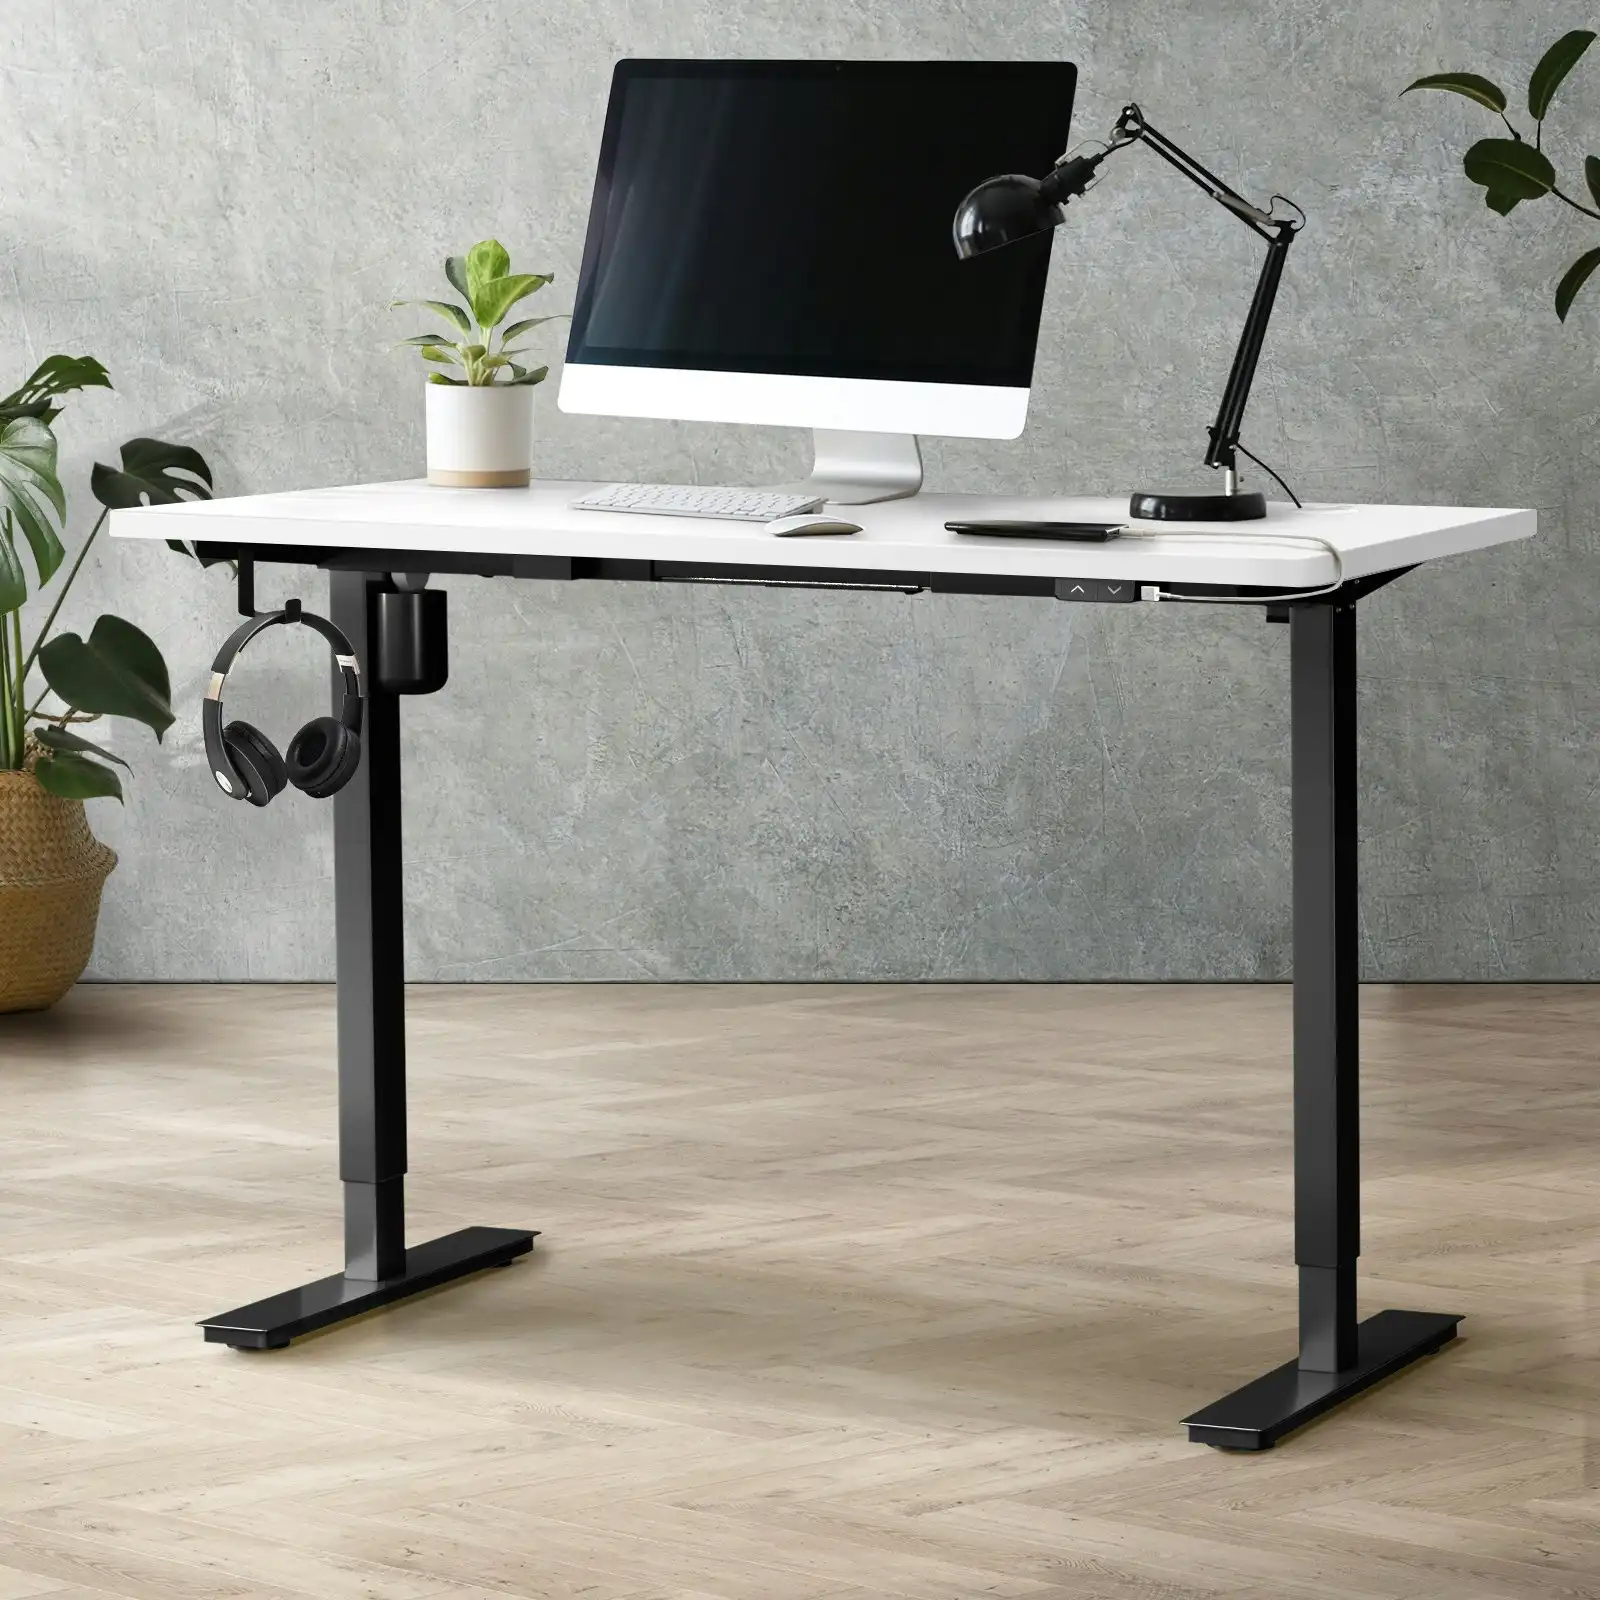 Oikiture 140cm Electric Standing Desk Single Motor Black Frame White Desktop